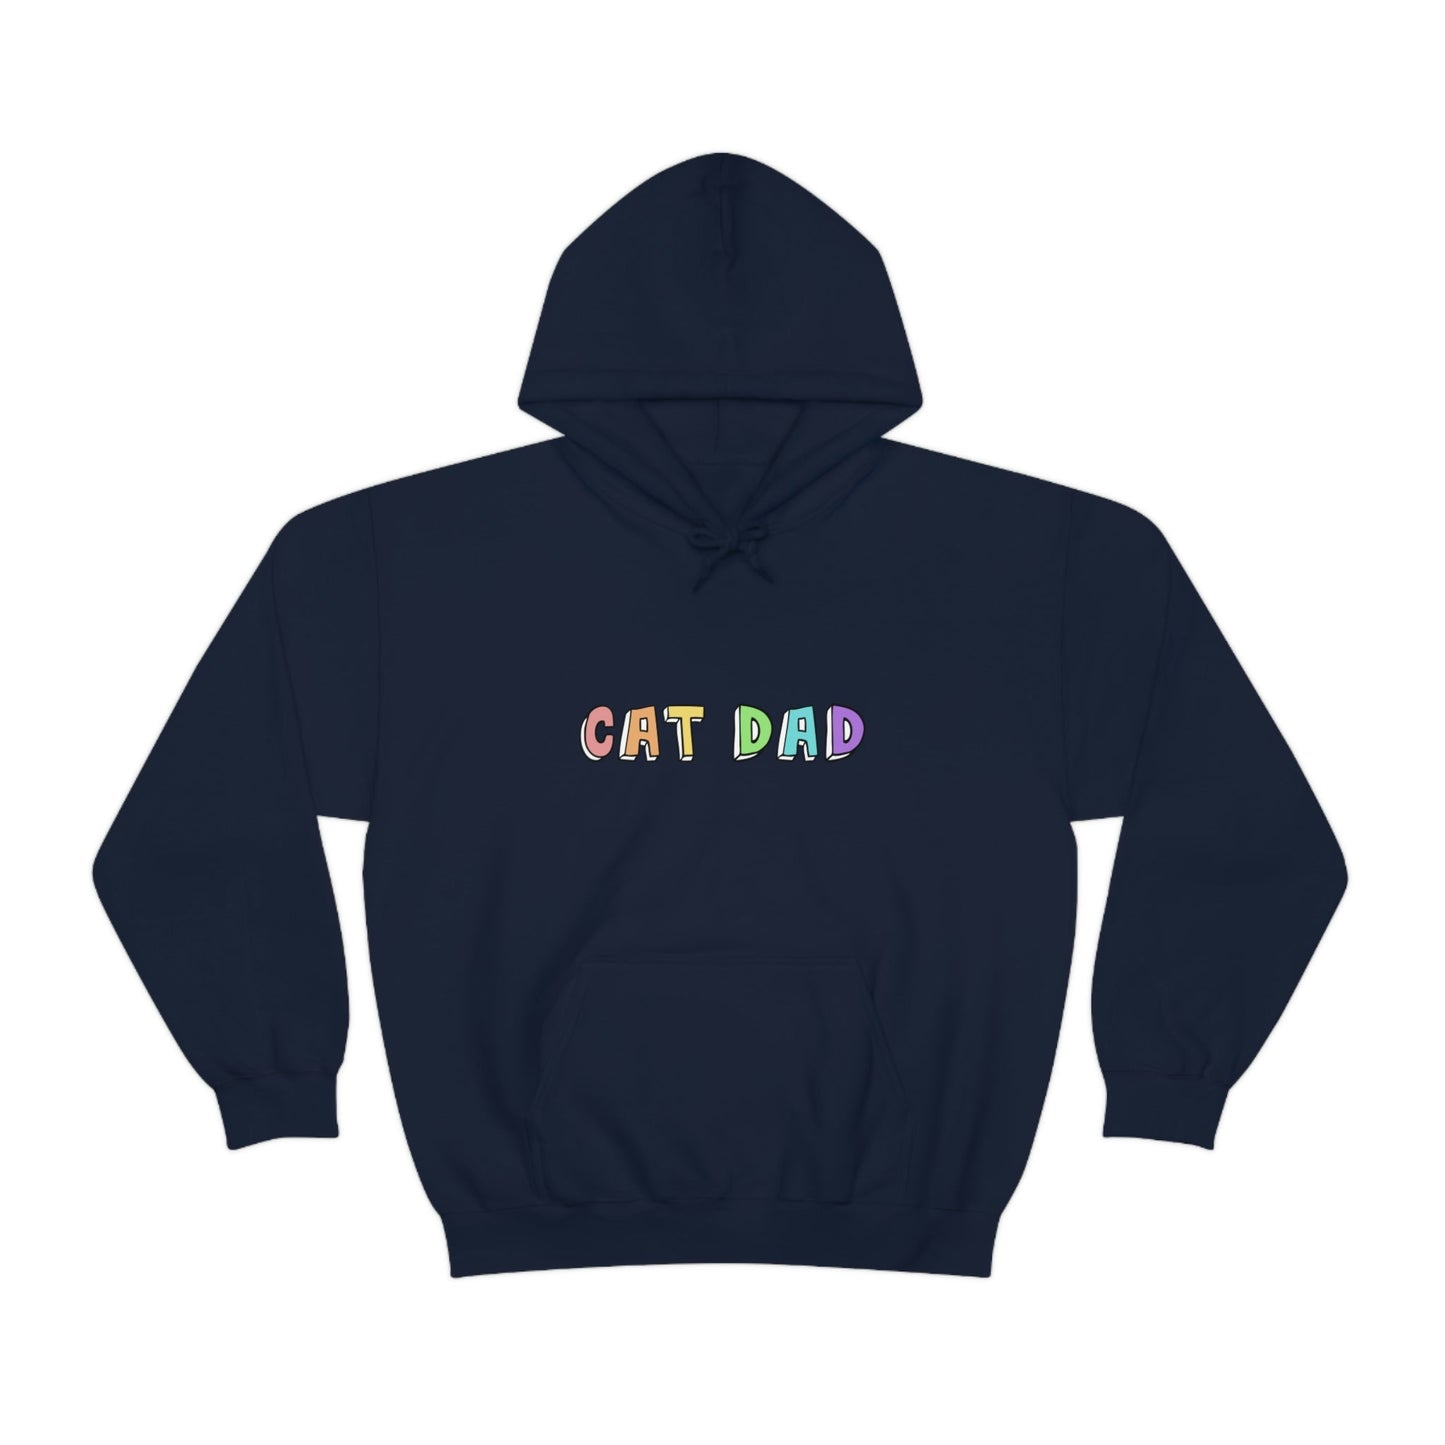 Cat Dad | Hooded Sweatshirt - Detezi Designs-19785249596494675288